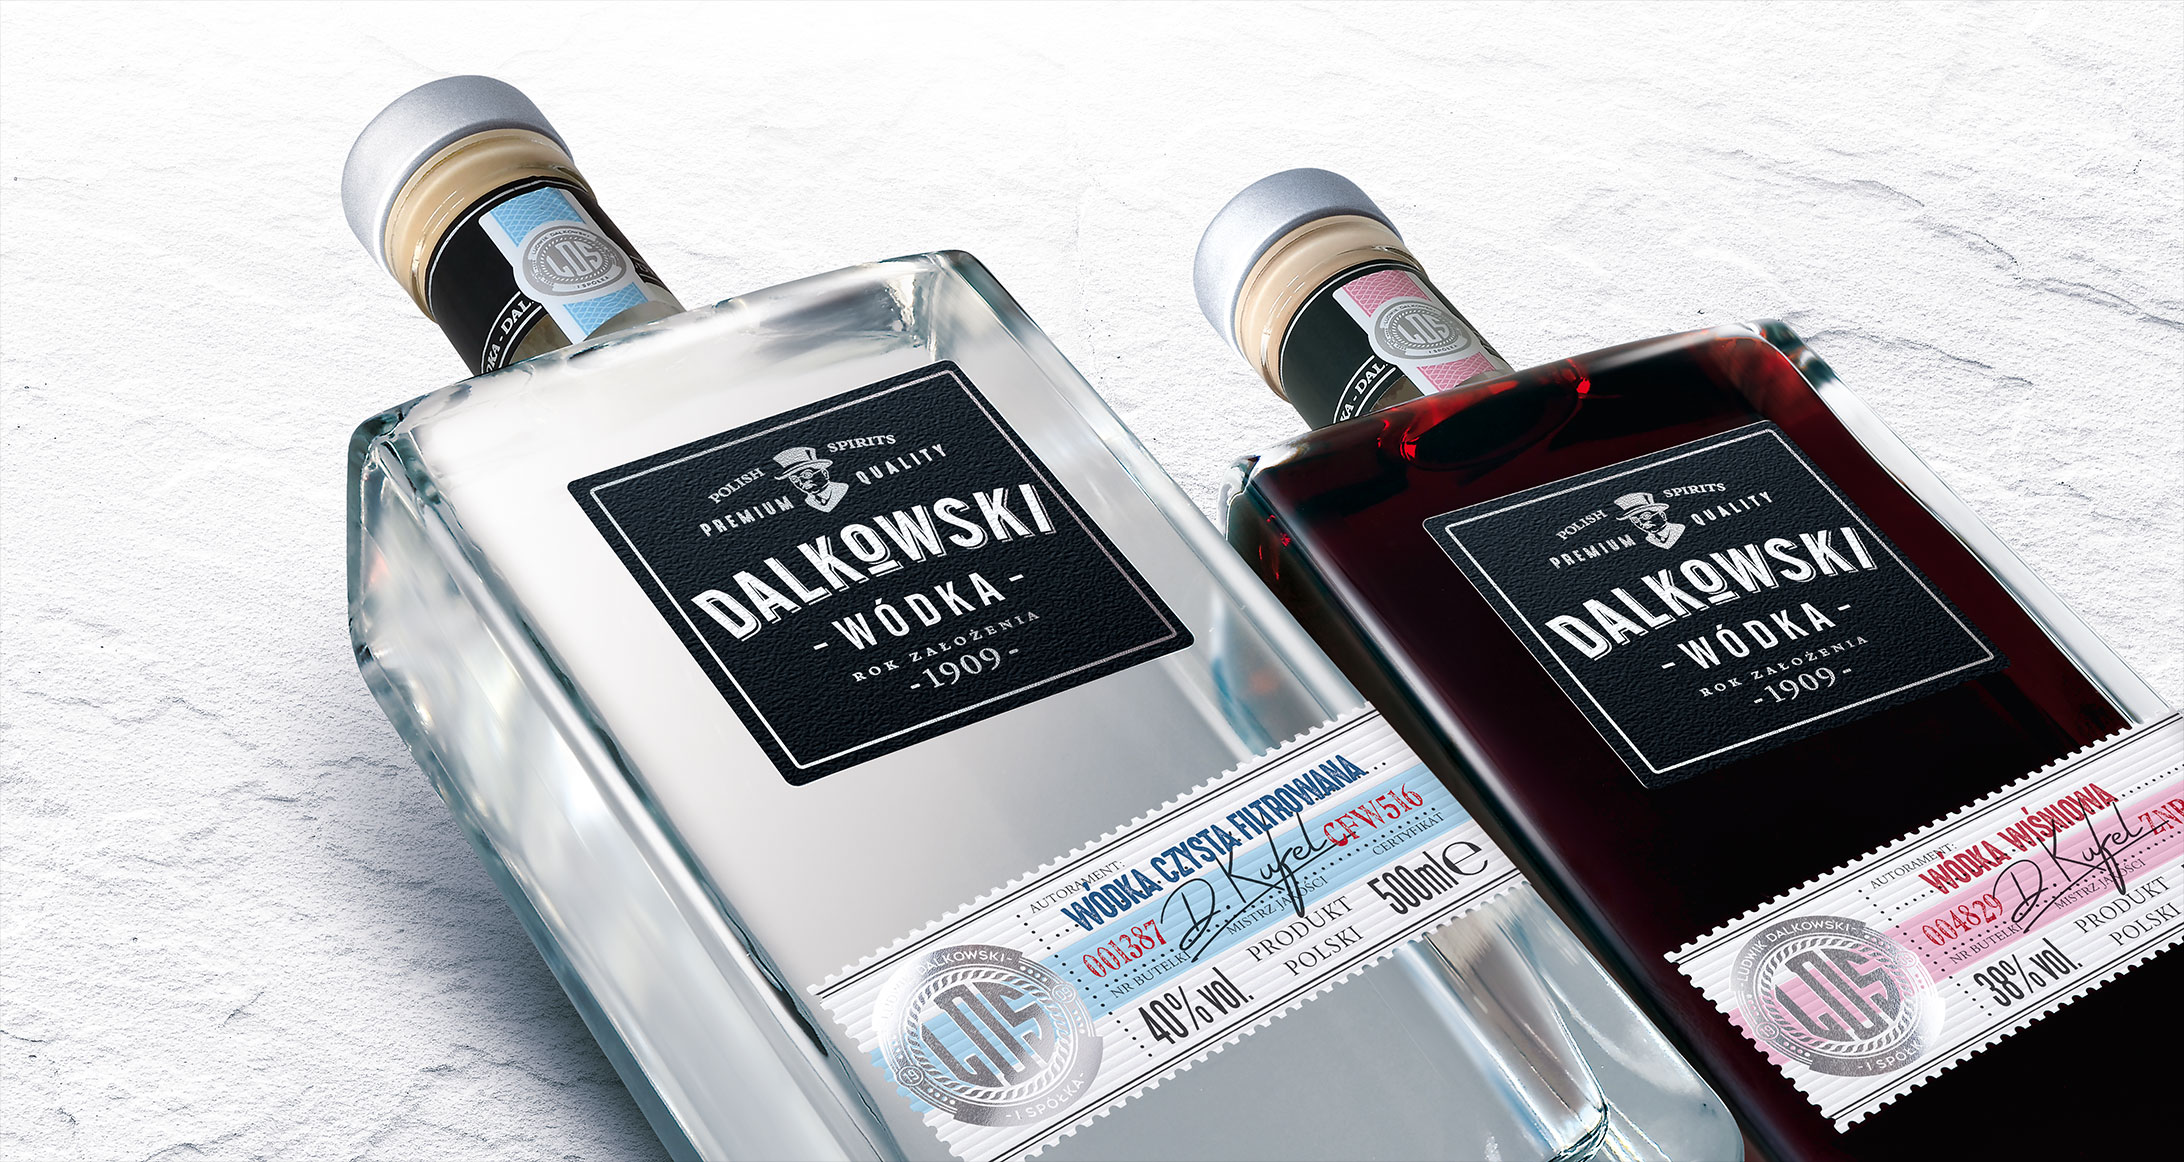 dalkowski vodka new packaging design